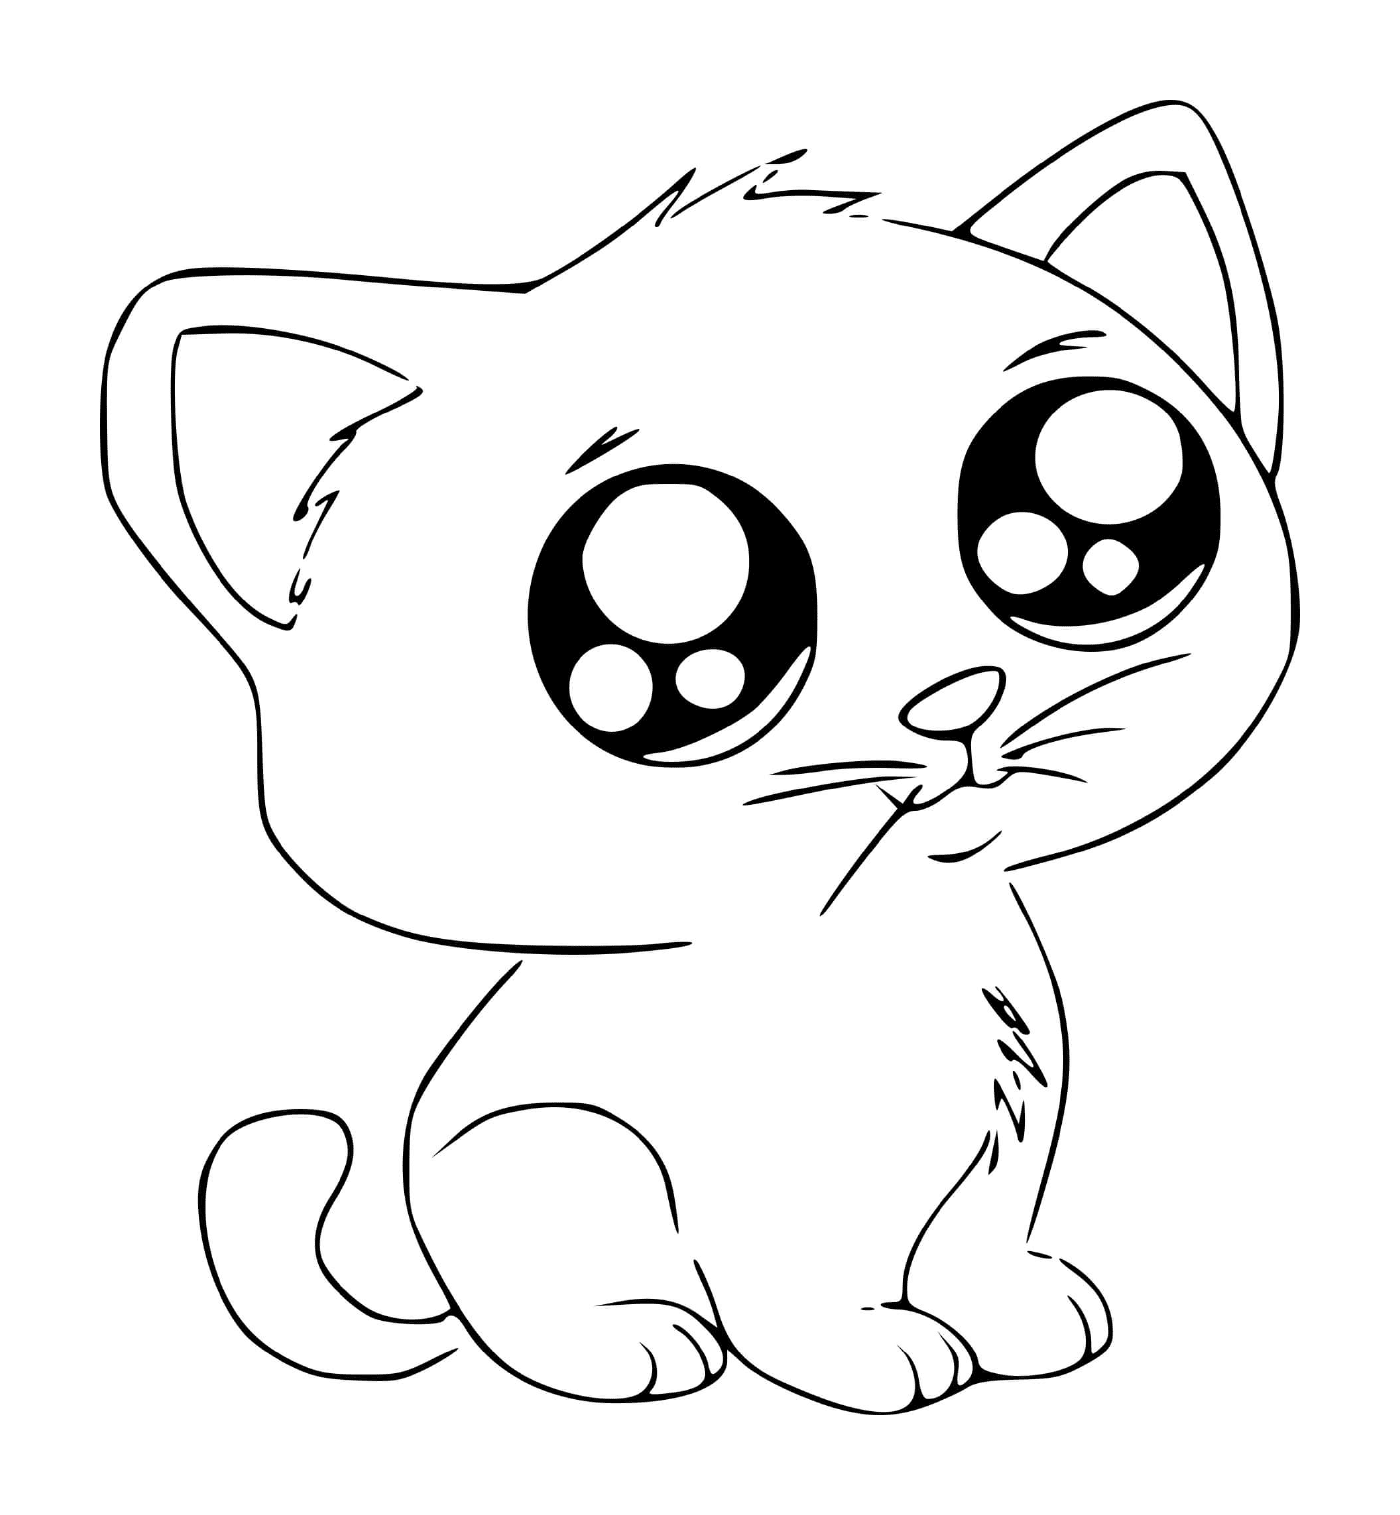  A cute manga kawaii style kitten 